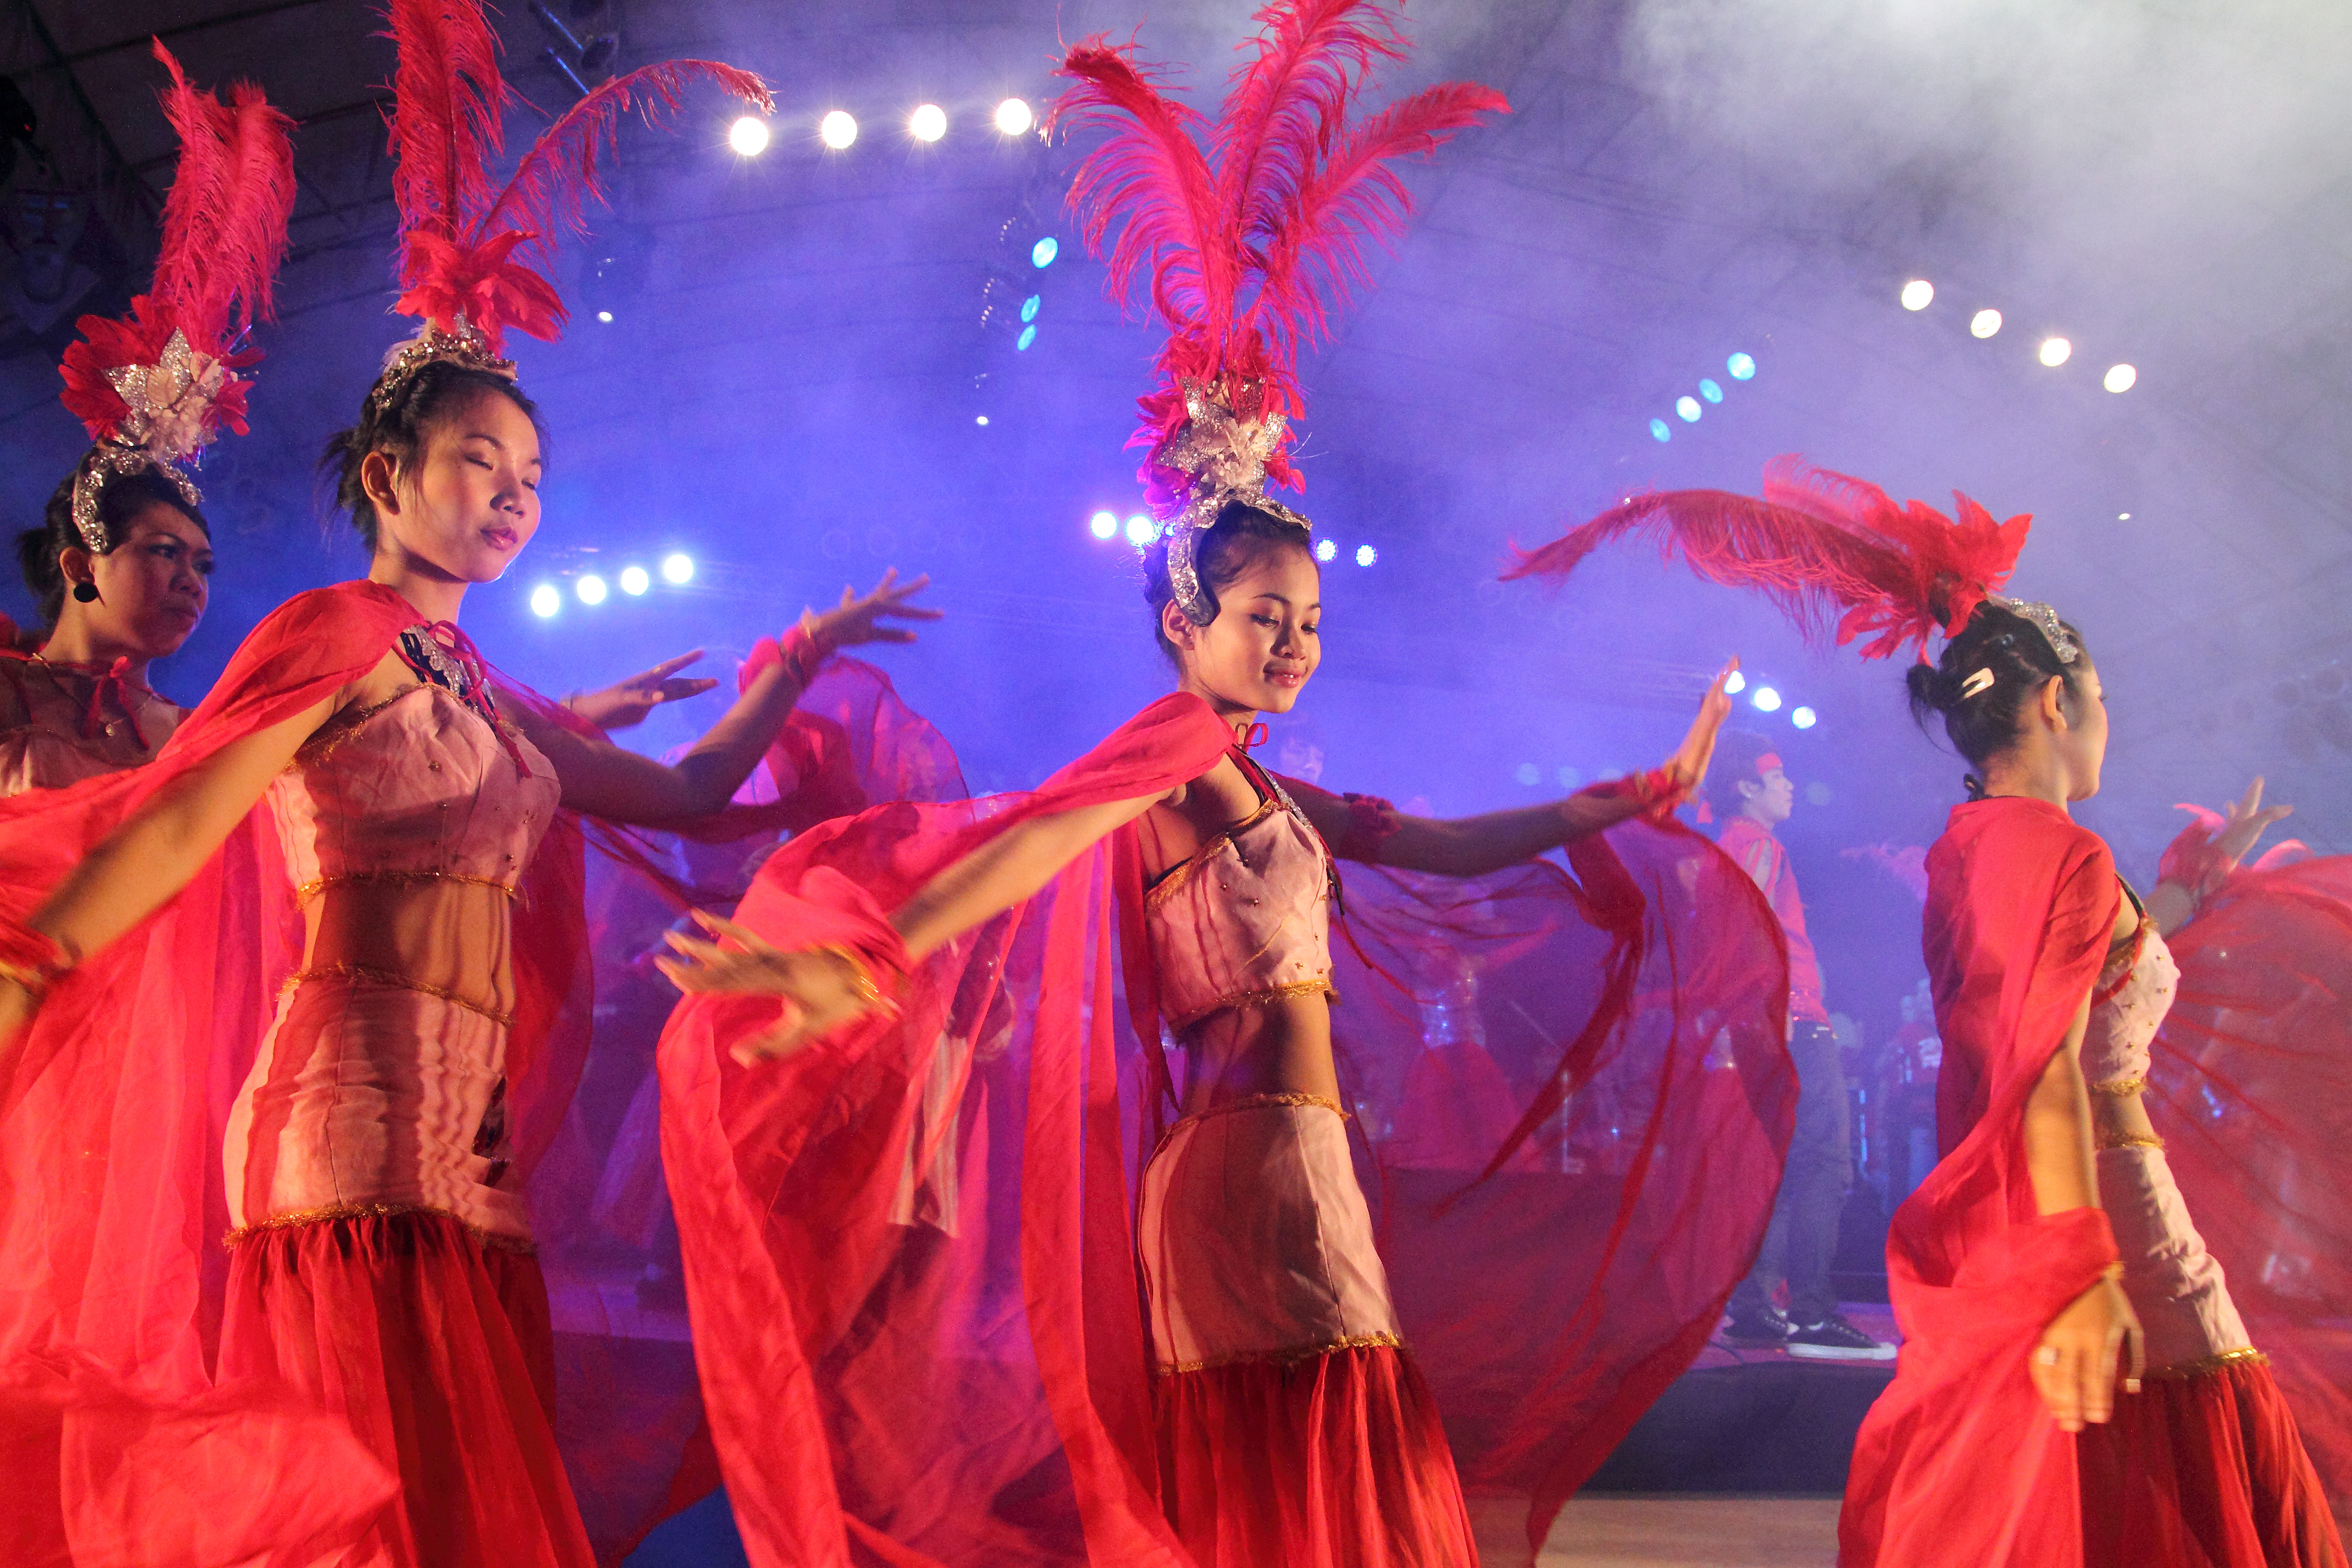 Red Shirt luk thung singers in a hang khruang ("dancing revue") in Khao Yai in November 2009. Photo credit: Nick Nostitz/Agentur Focus